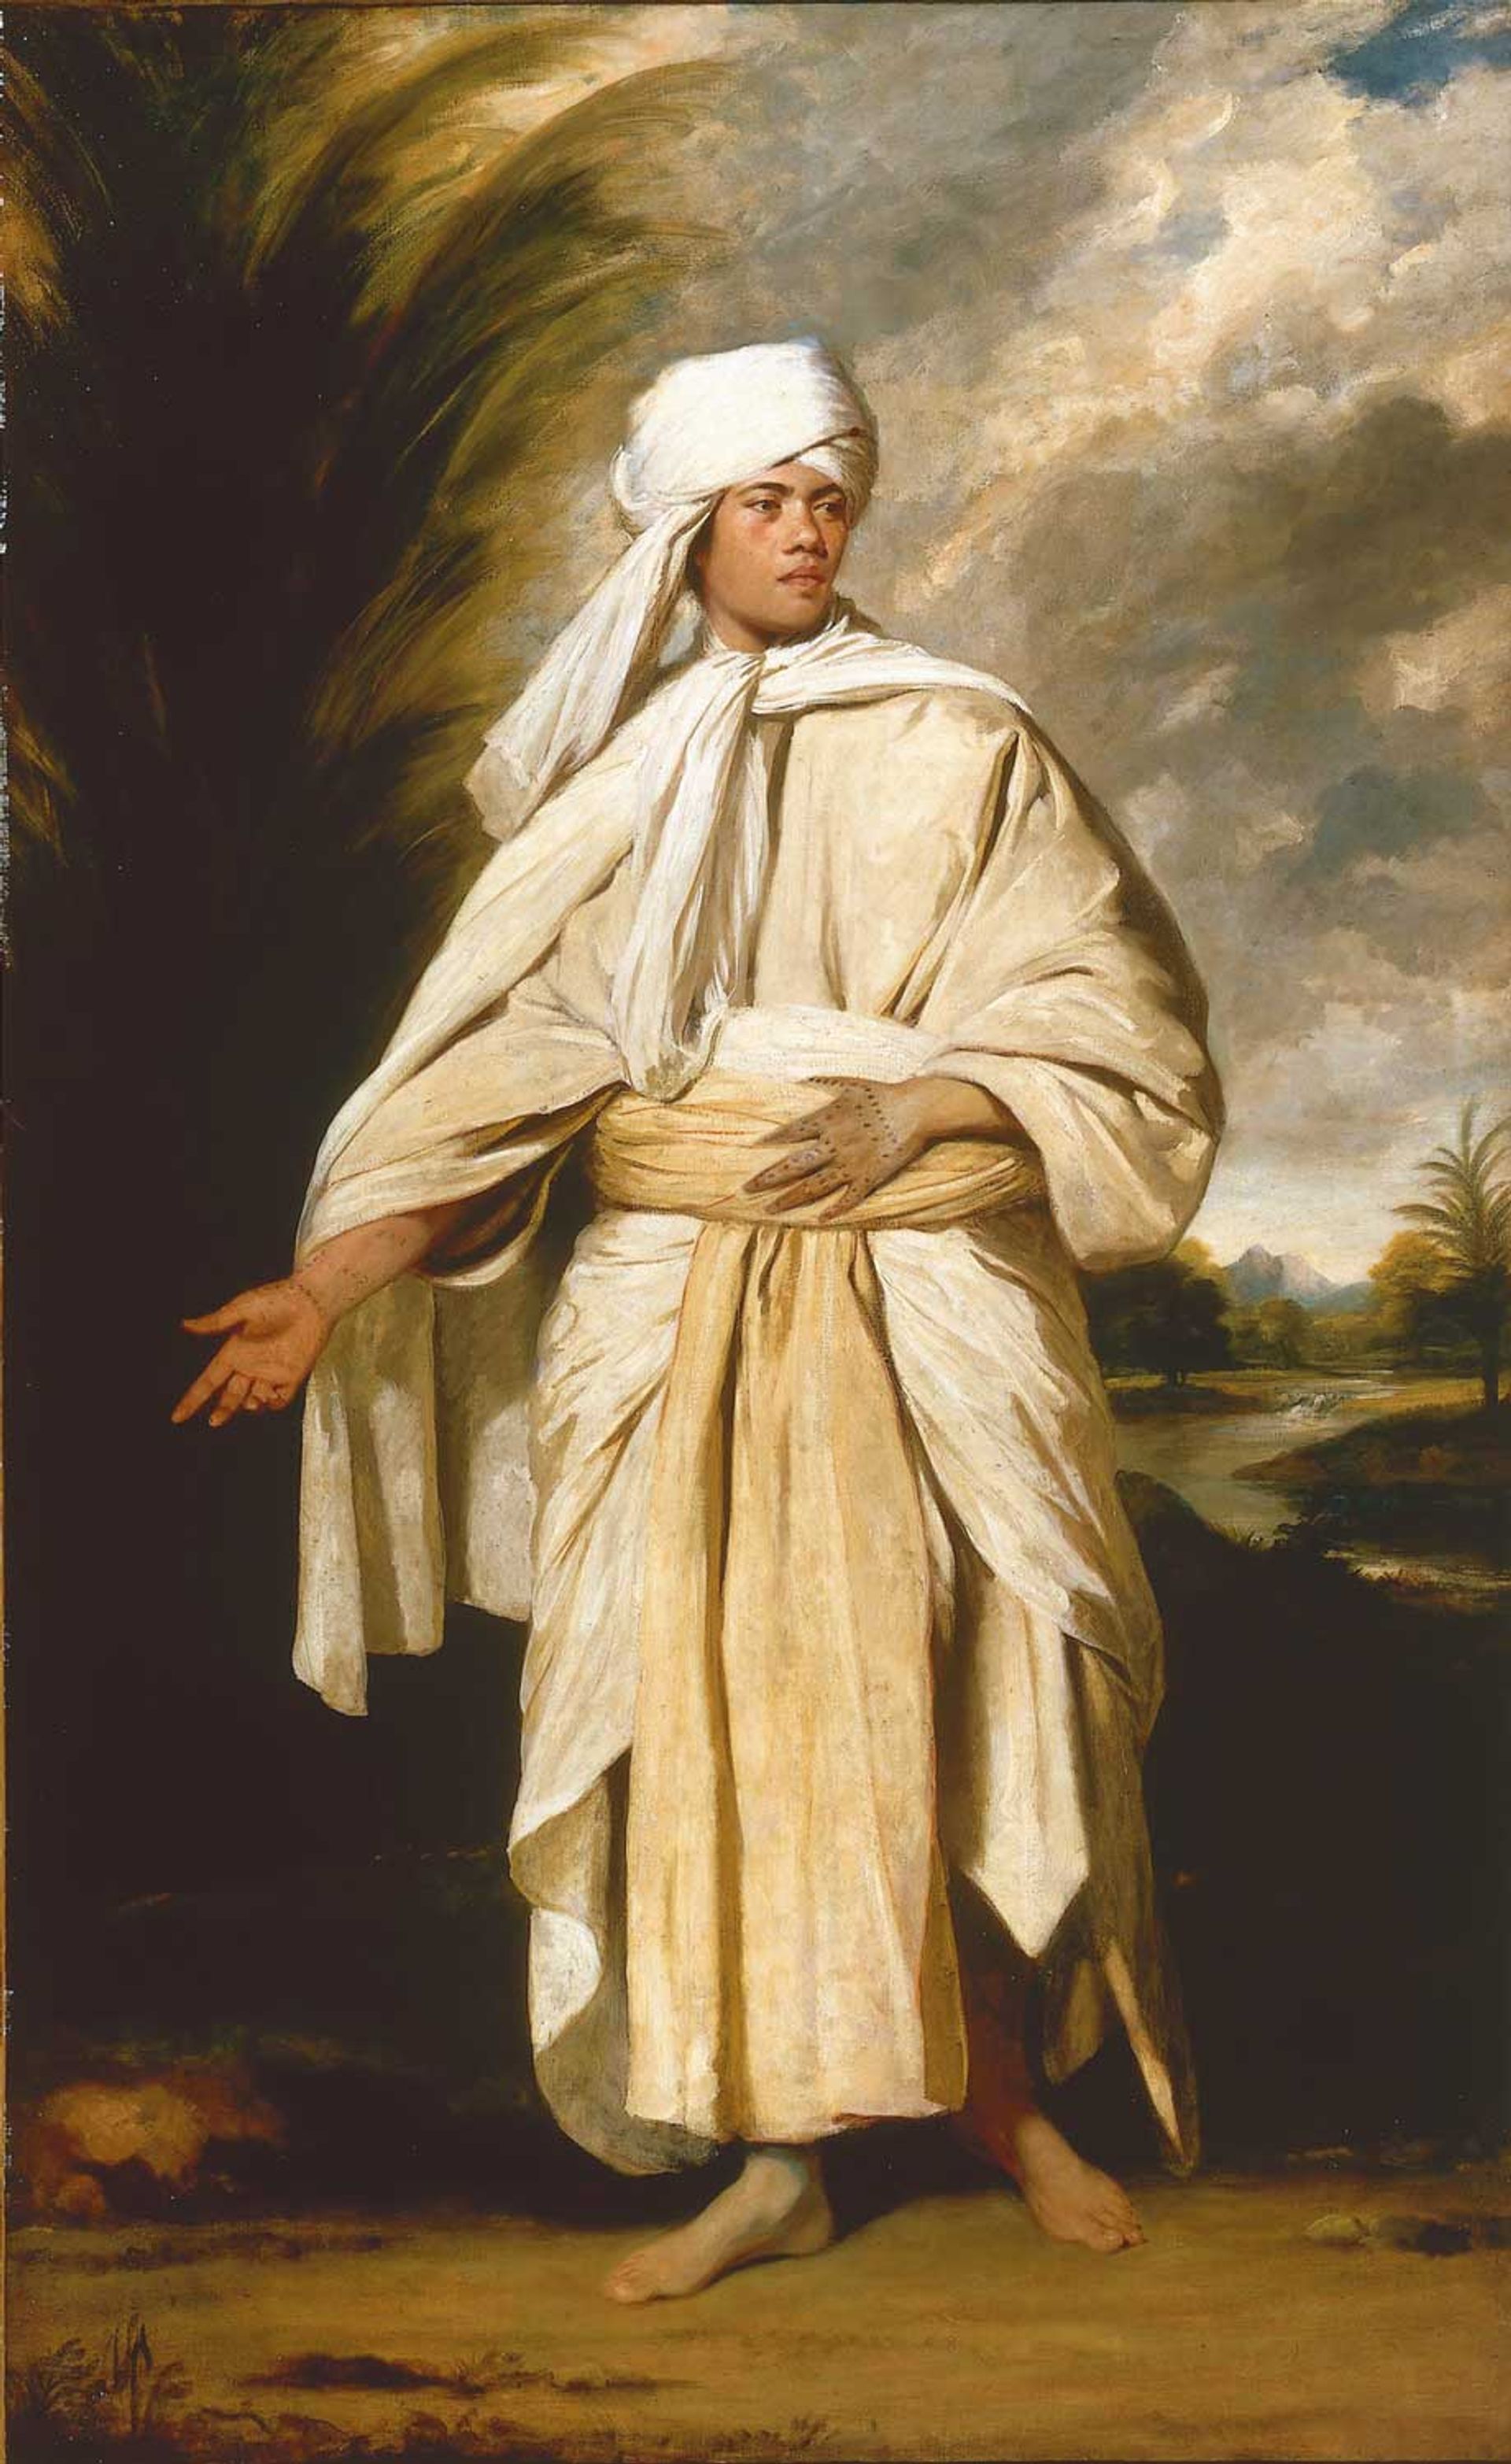 Joshua Reynolds's Portrait of Omai (around 1776)

Courtesy of the National Portrait Gallery, London